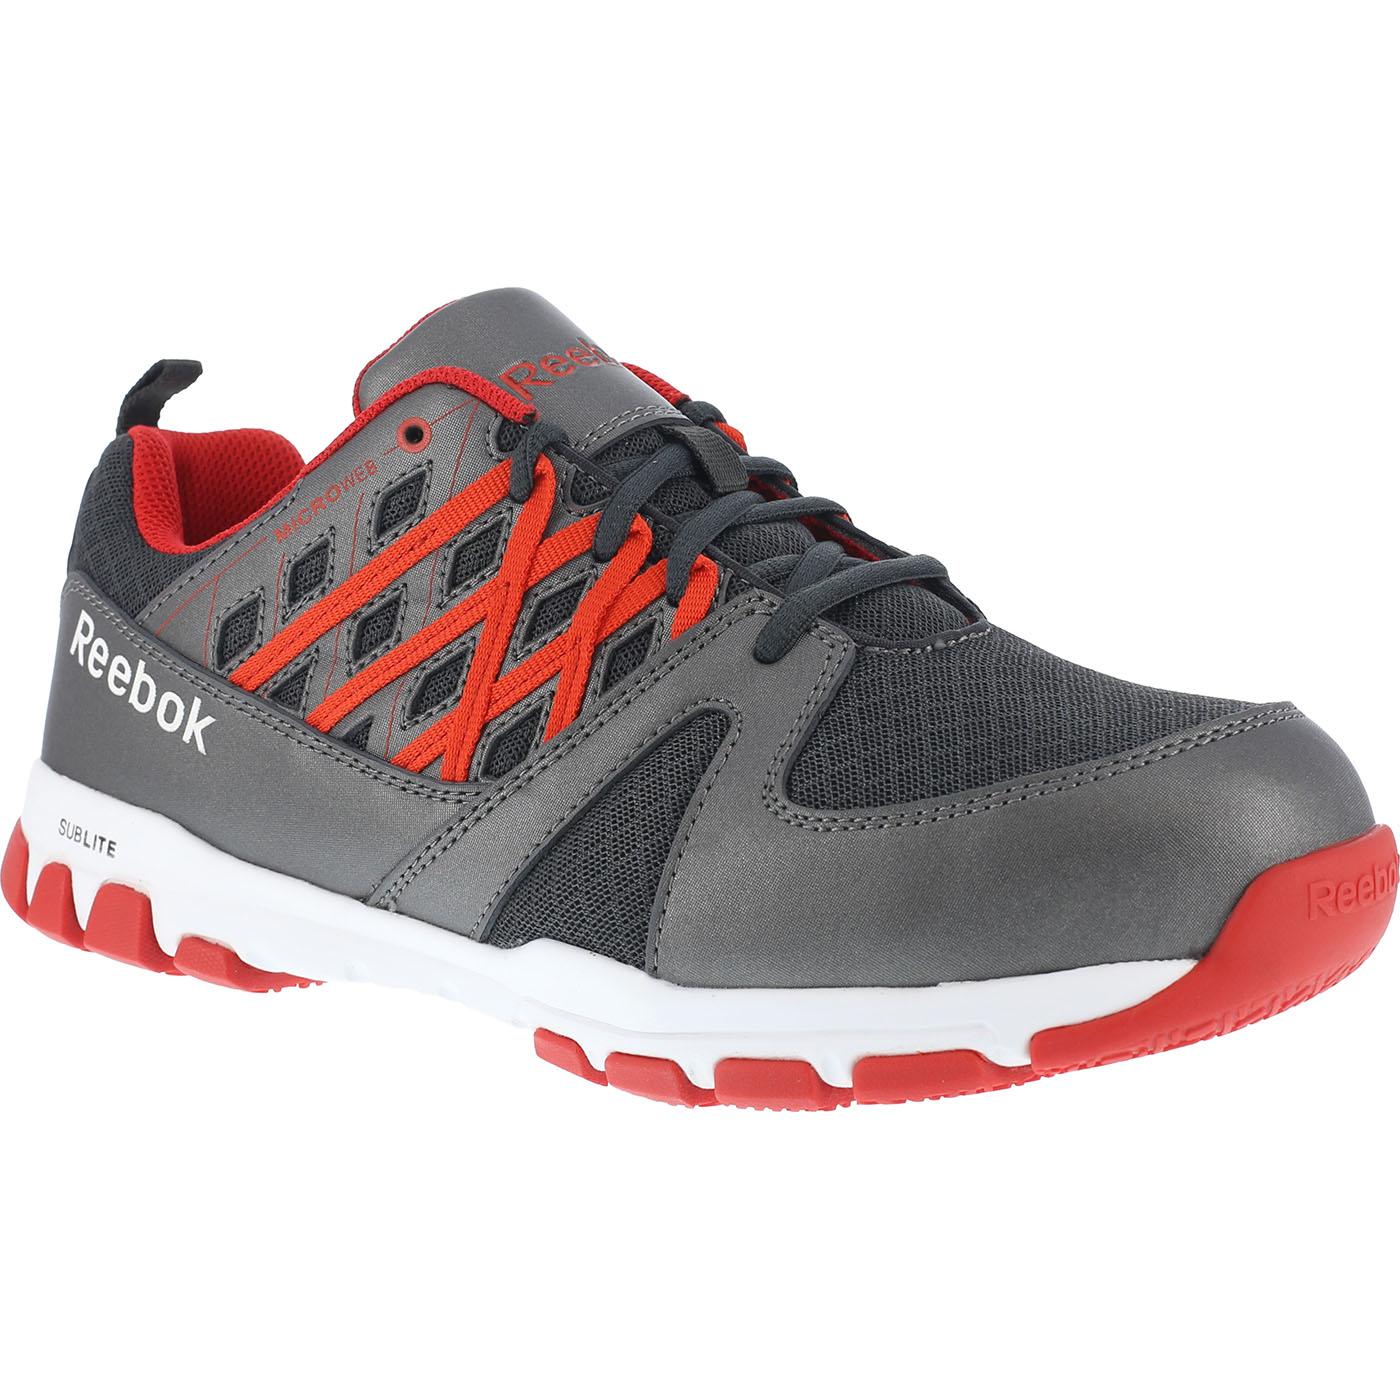 Reebok Sublite Steel Toe Work Athletic Shoe Size 14(W) - image 1 of 4